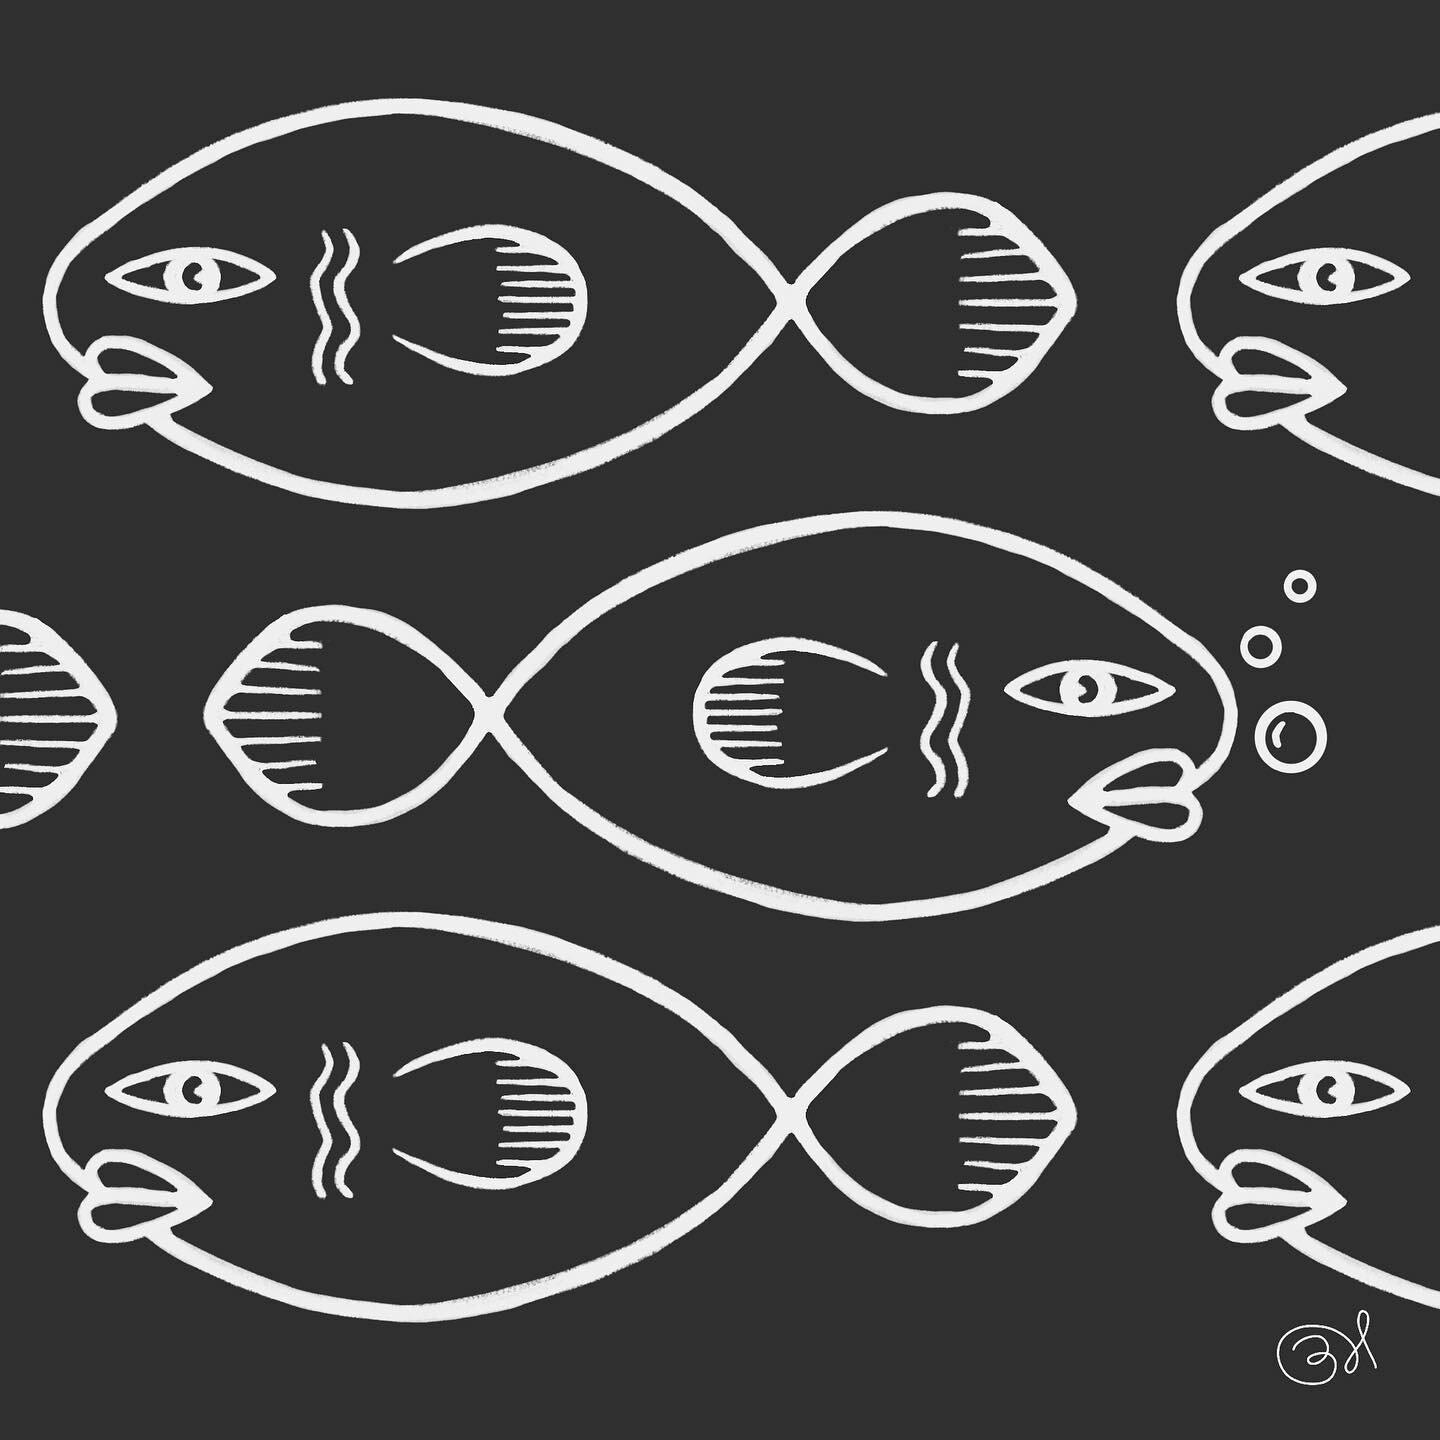 Fishtober #inktober2020

_______________
#lips #art #illustration #drawing #handdrawn #doodle #artwork #graphicdesign #logodesigner #logoideas #lake #logodesign #drawmore #thedesigntip #debate  #ink #inktober2020 #artist  #illustrator #handdrawn #cre